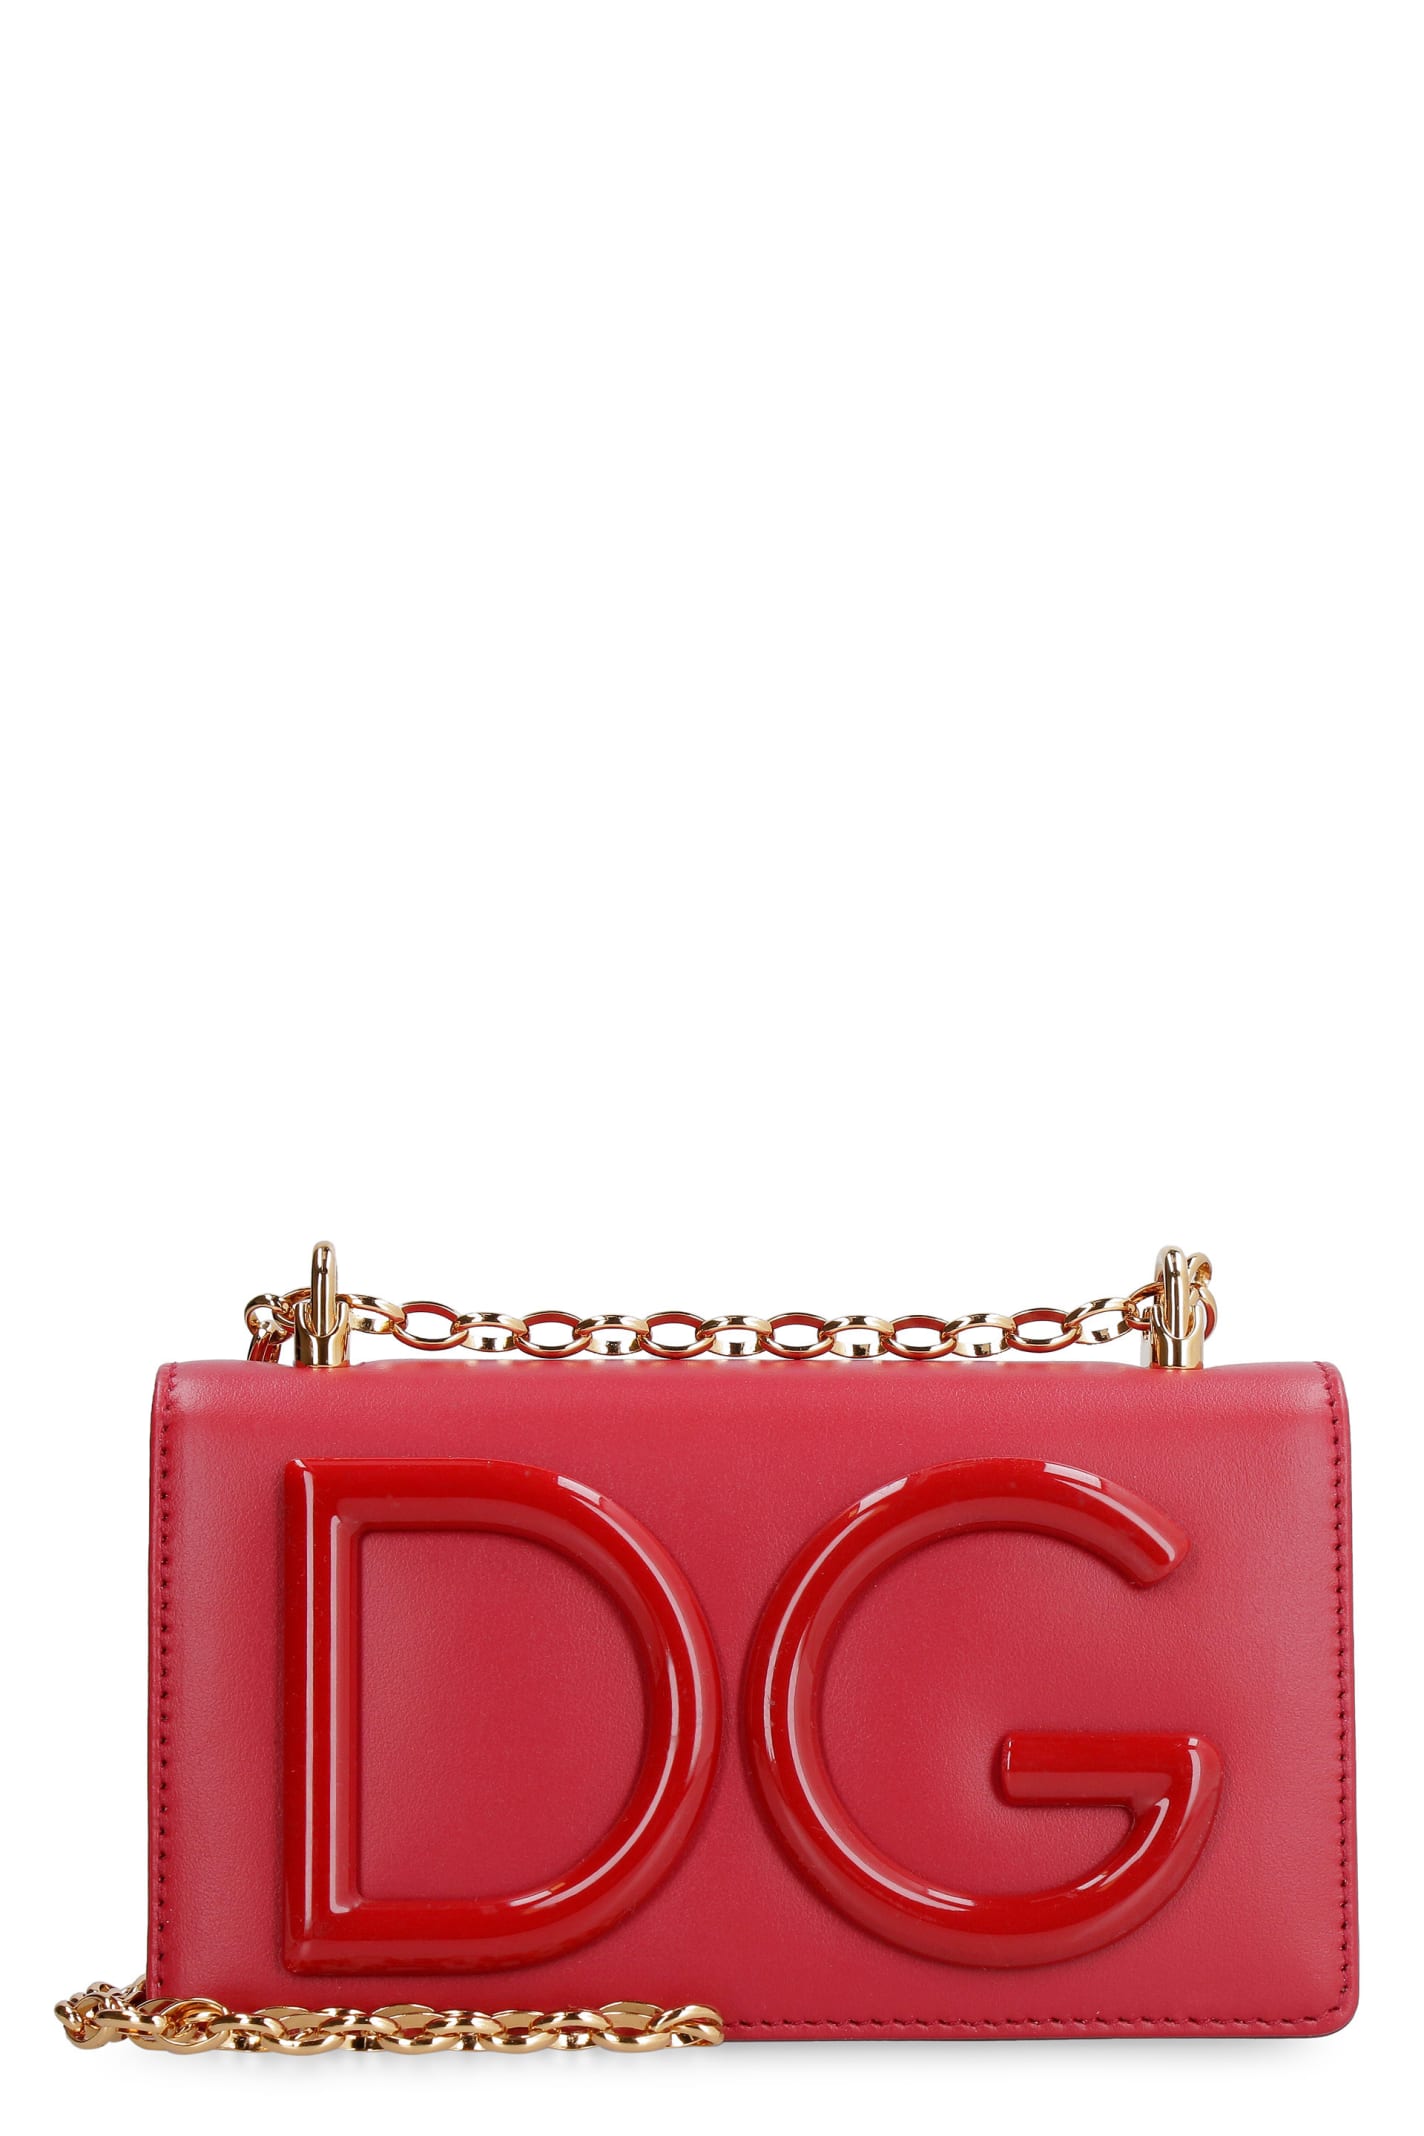 Dolce & Gabbana Dg Girl Mini Crossbody Bag